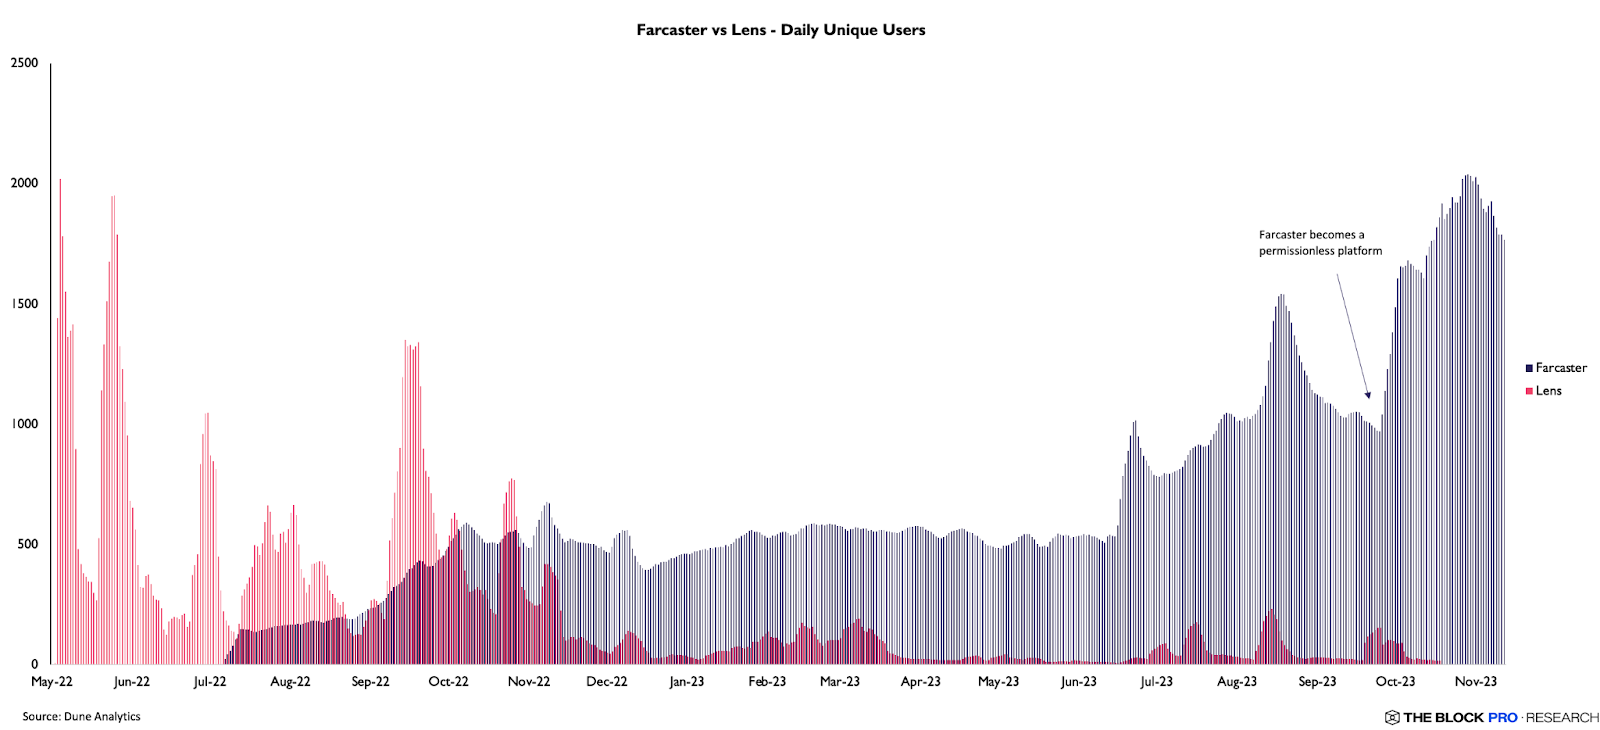 Farcaster شاهد افزایش سریع تعداد کاربران روزانه بوده است. تصویر: The Block Pro/Dune Analytics.